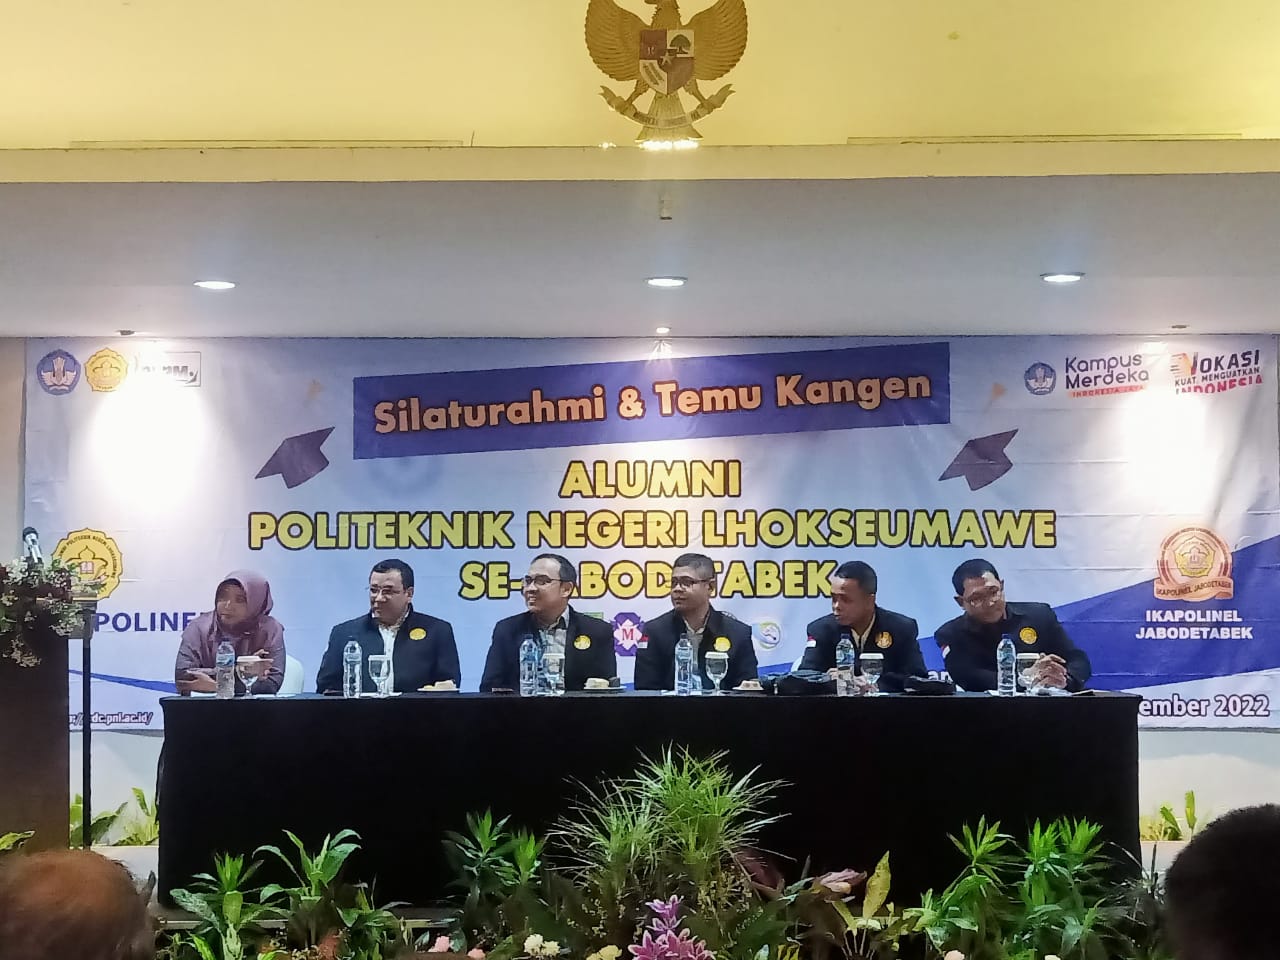 Ikapolinel Jabodetabek Sukses Gelar Silaturrahmi dan Temu Kangen Alumni dengan Manajemen PNL